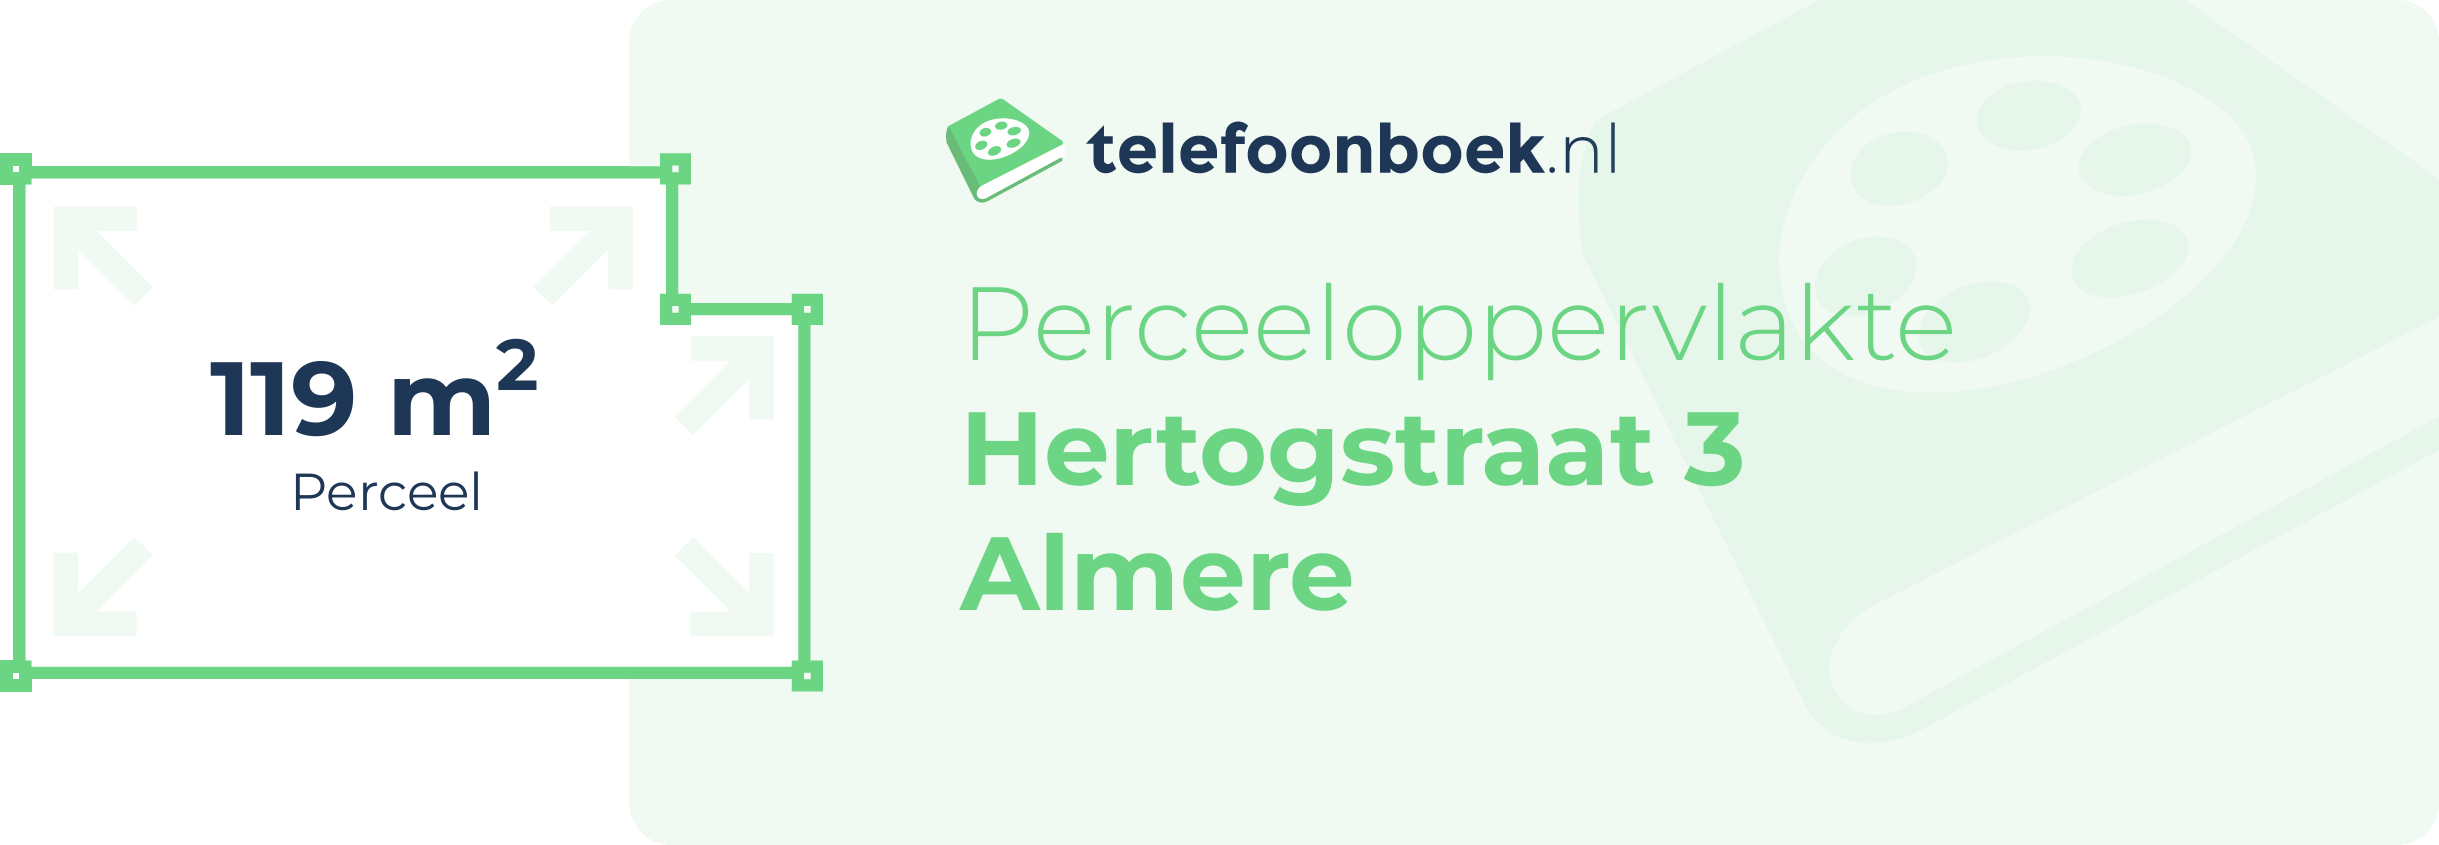 Perceeloppervlakte Hertogstraat 3 Almere